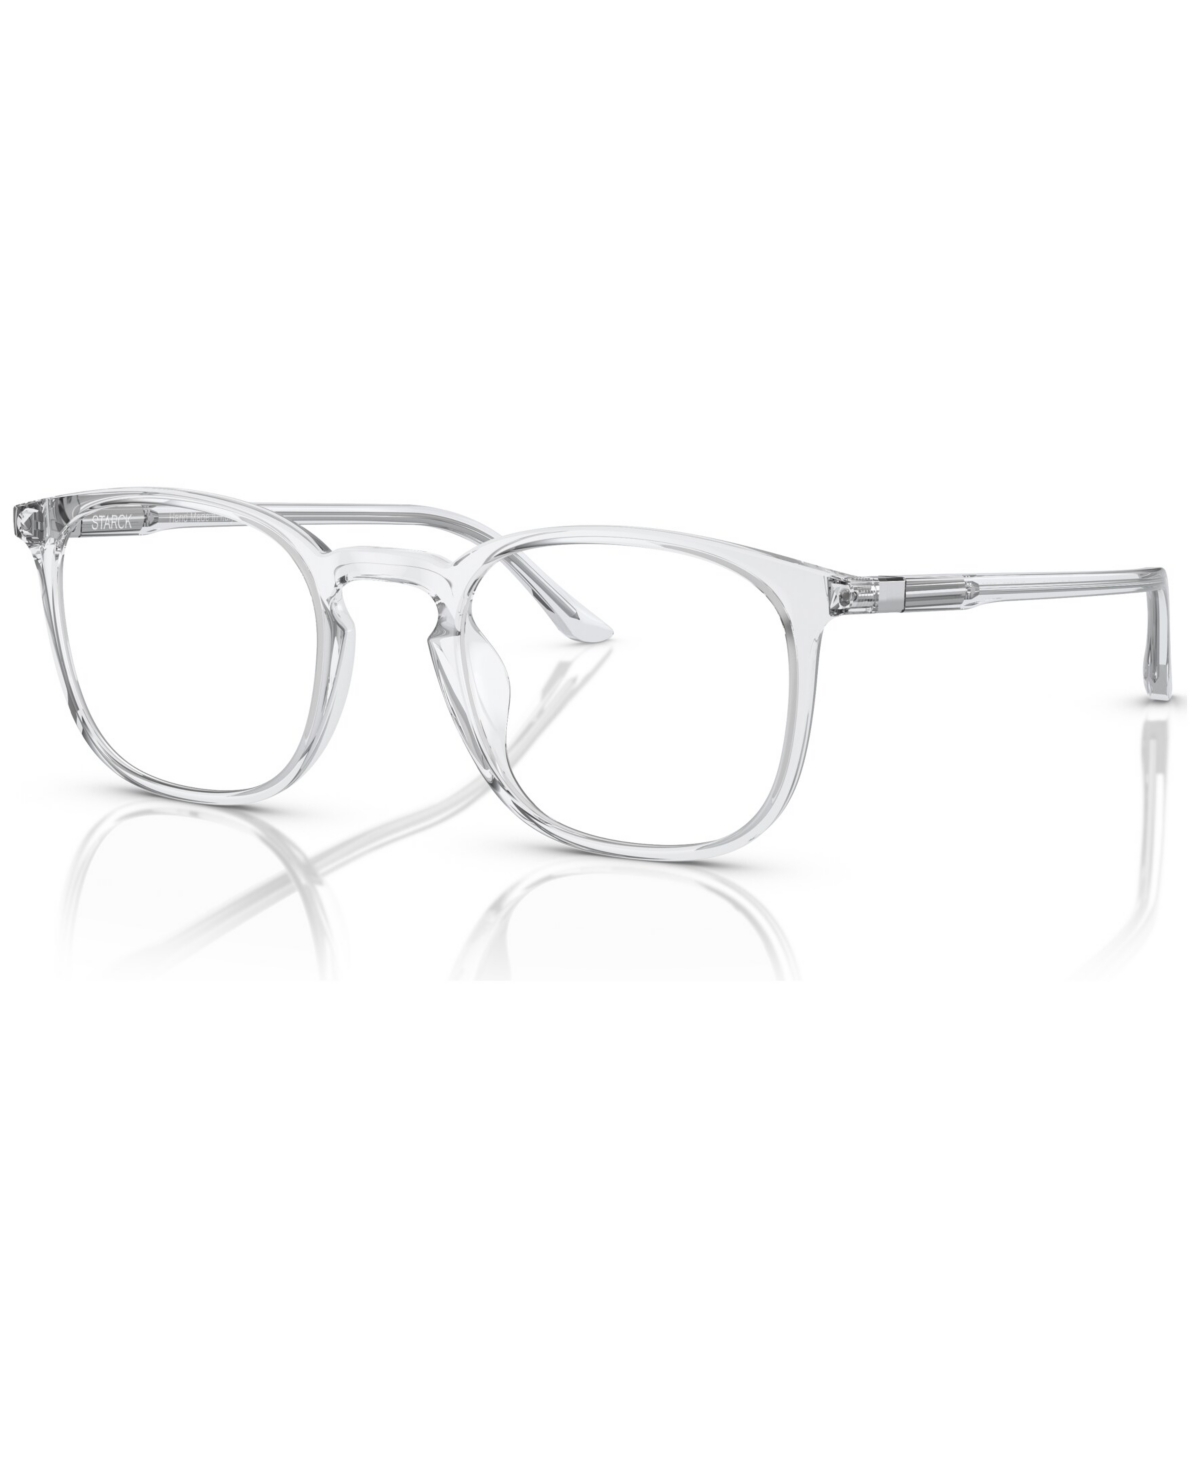 Men's Eyeglasses, SH3088 49 - Crystal